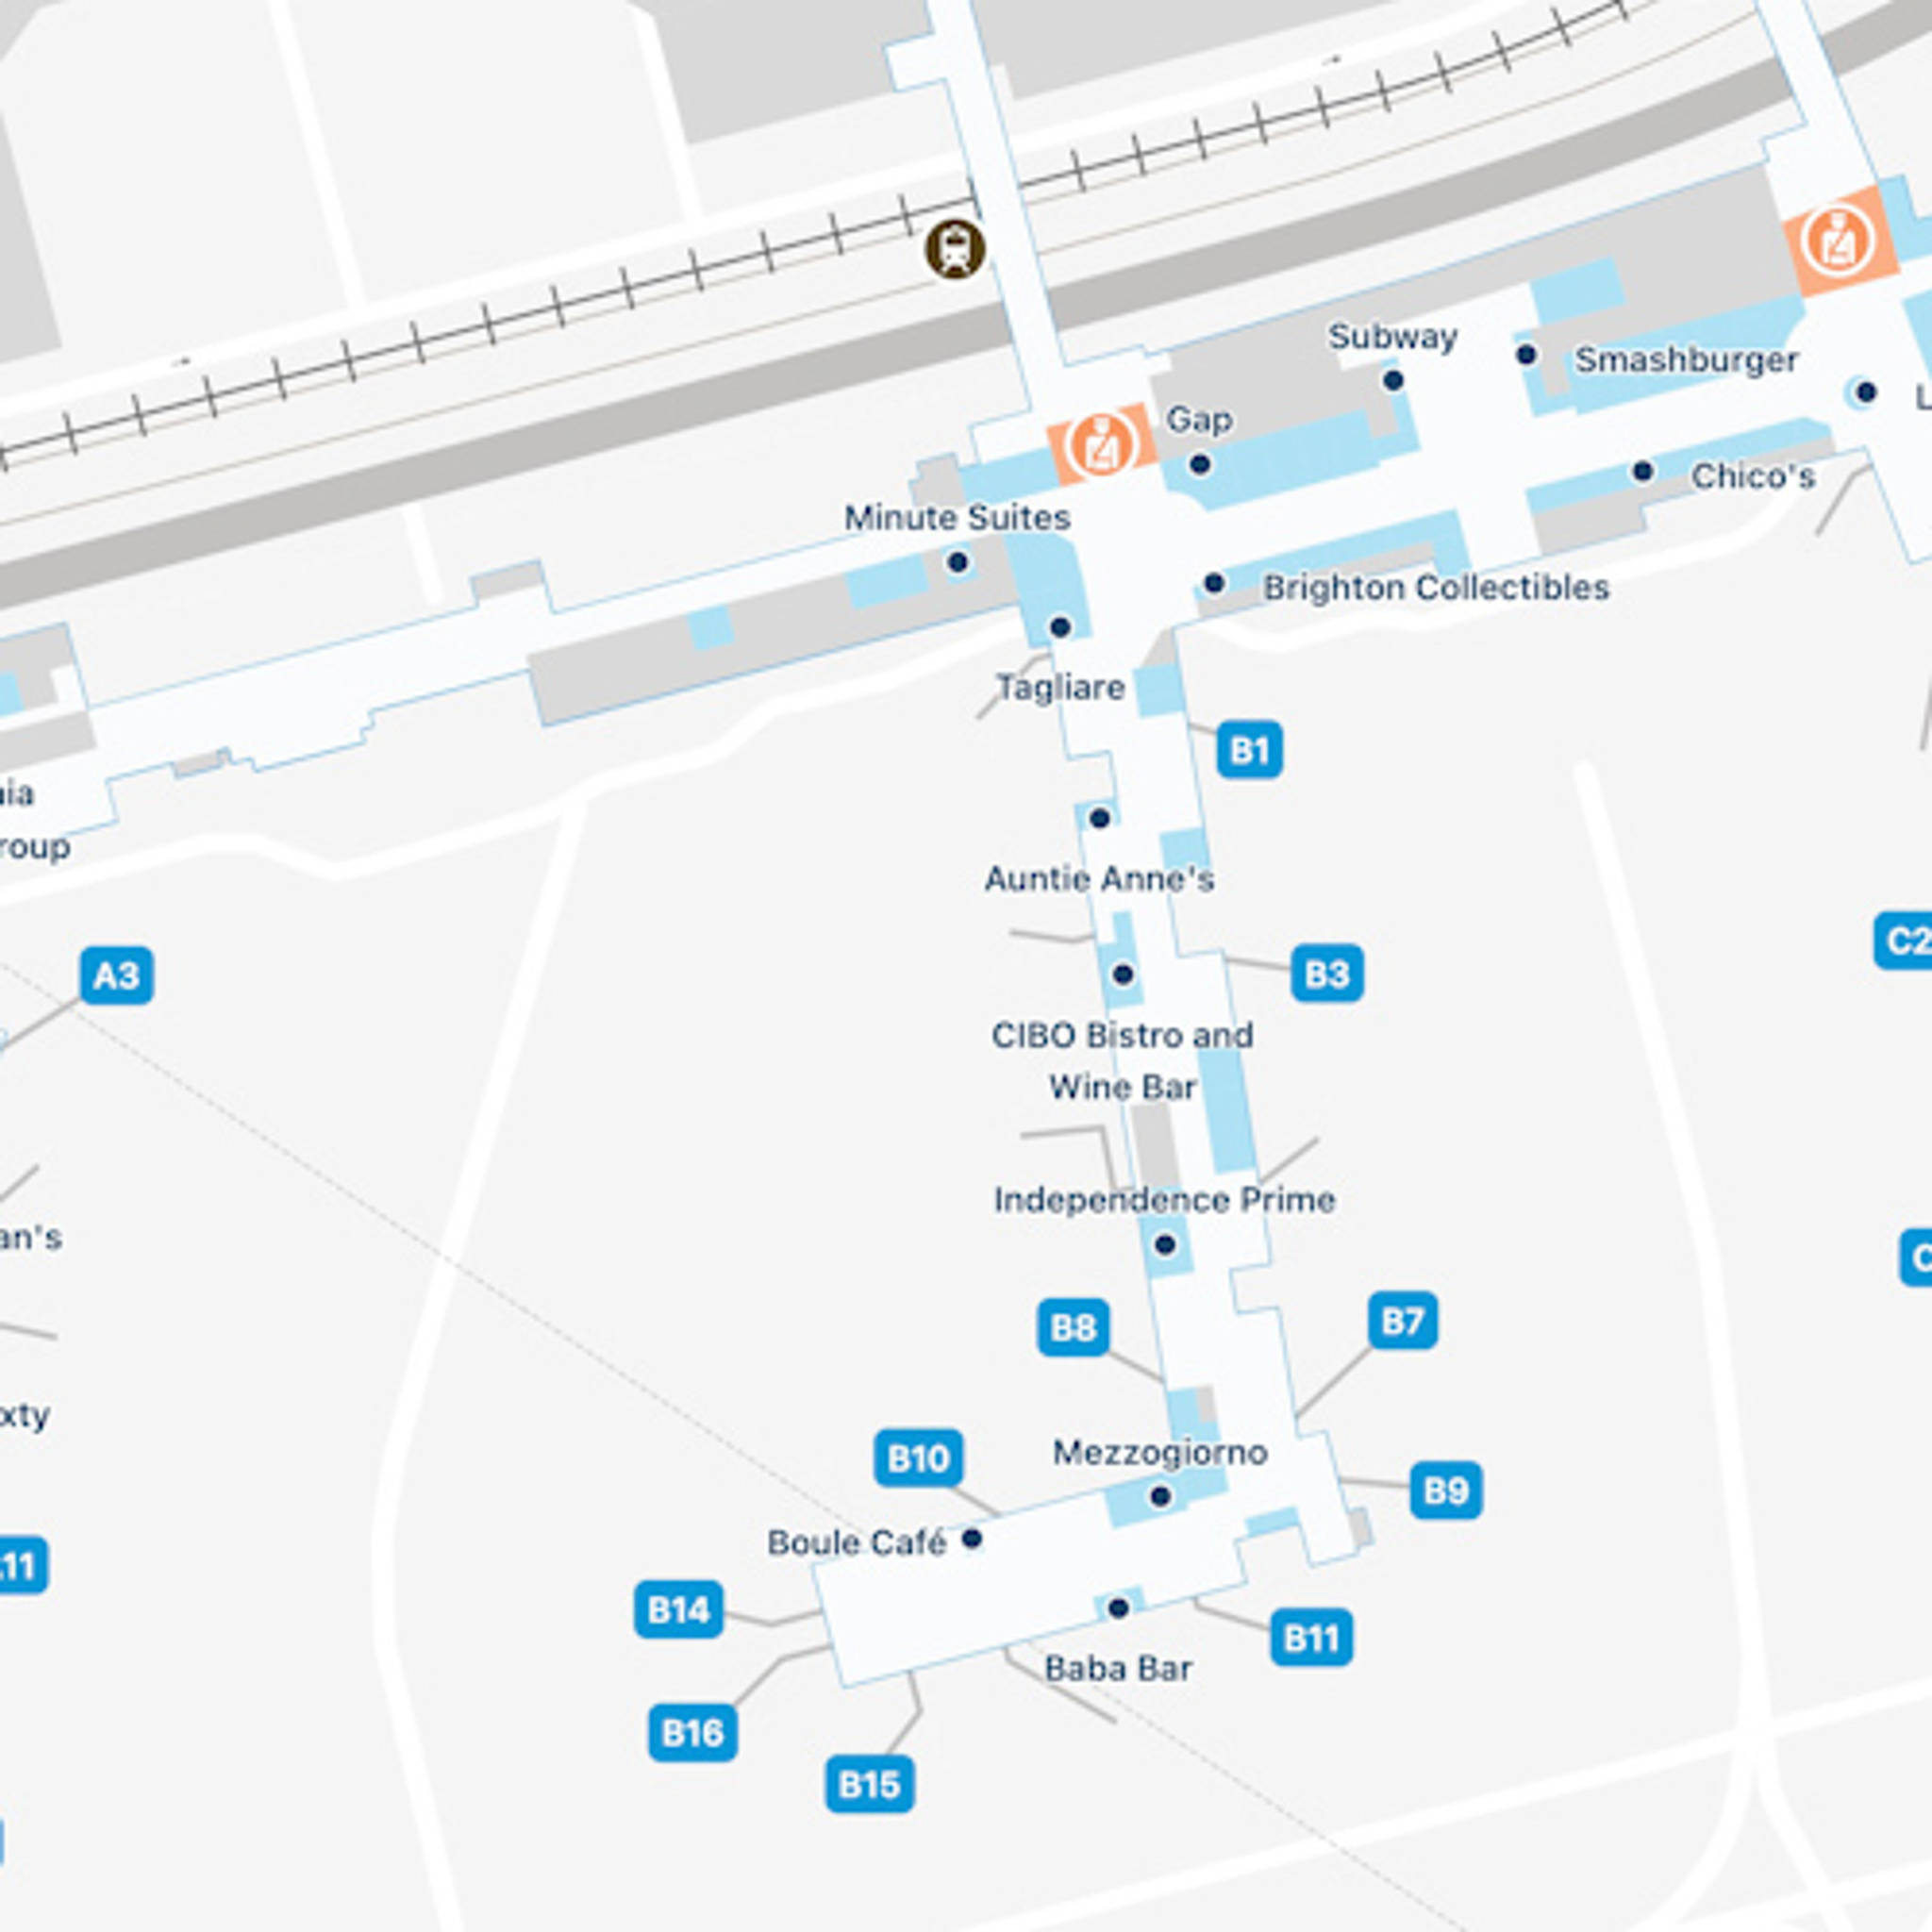 Philadelphia Airport Map Phl Terminal Guide